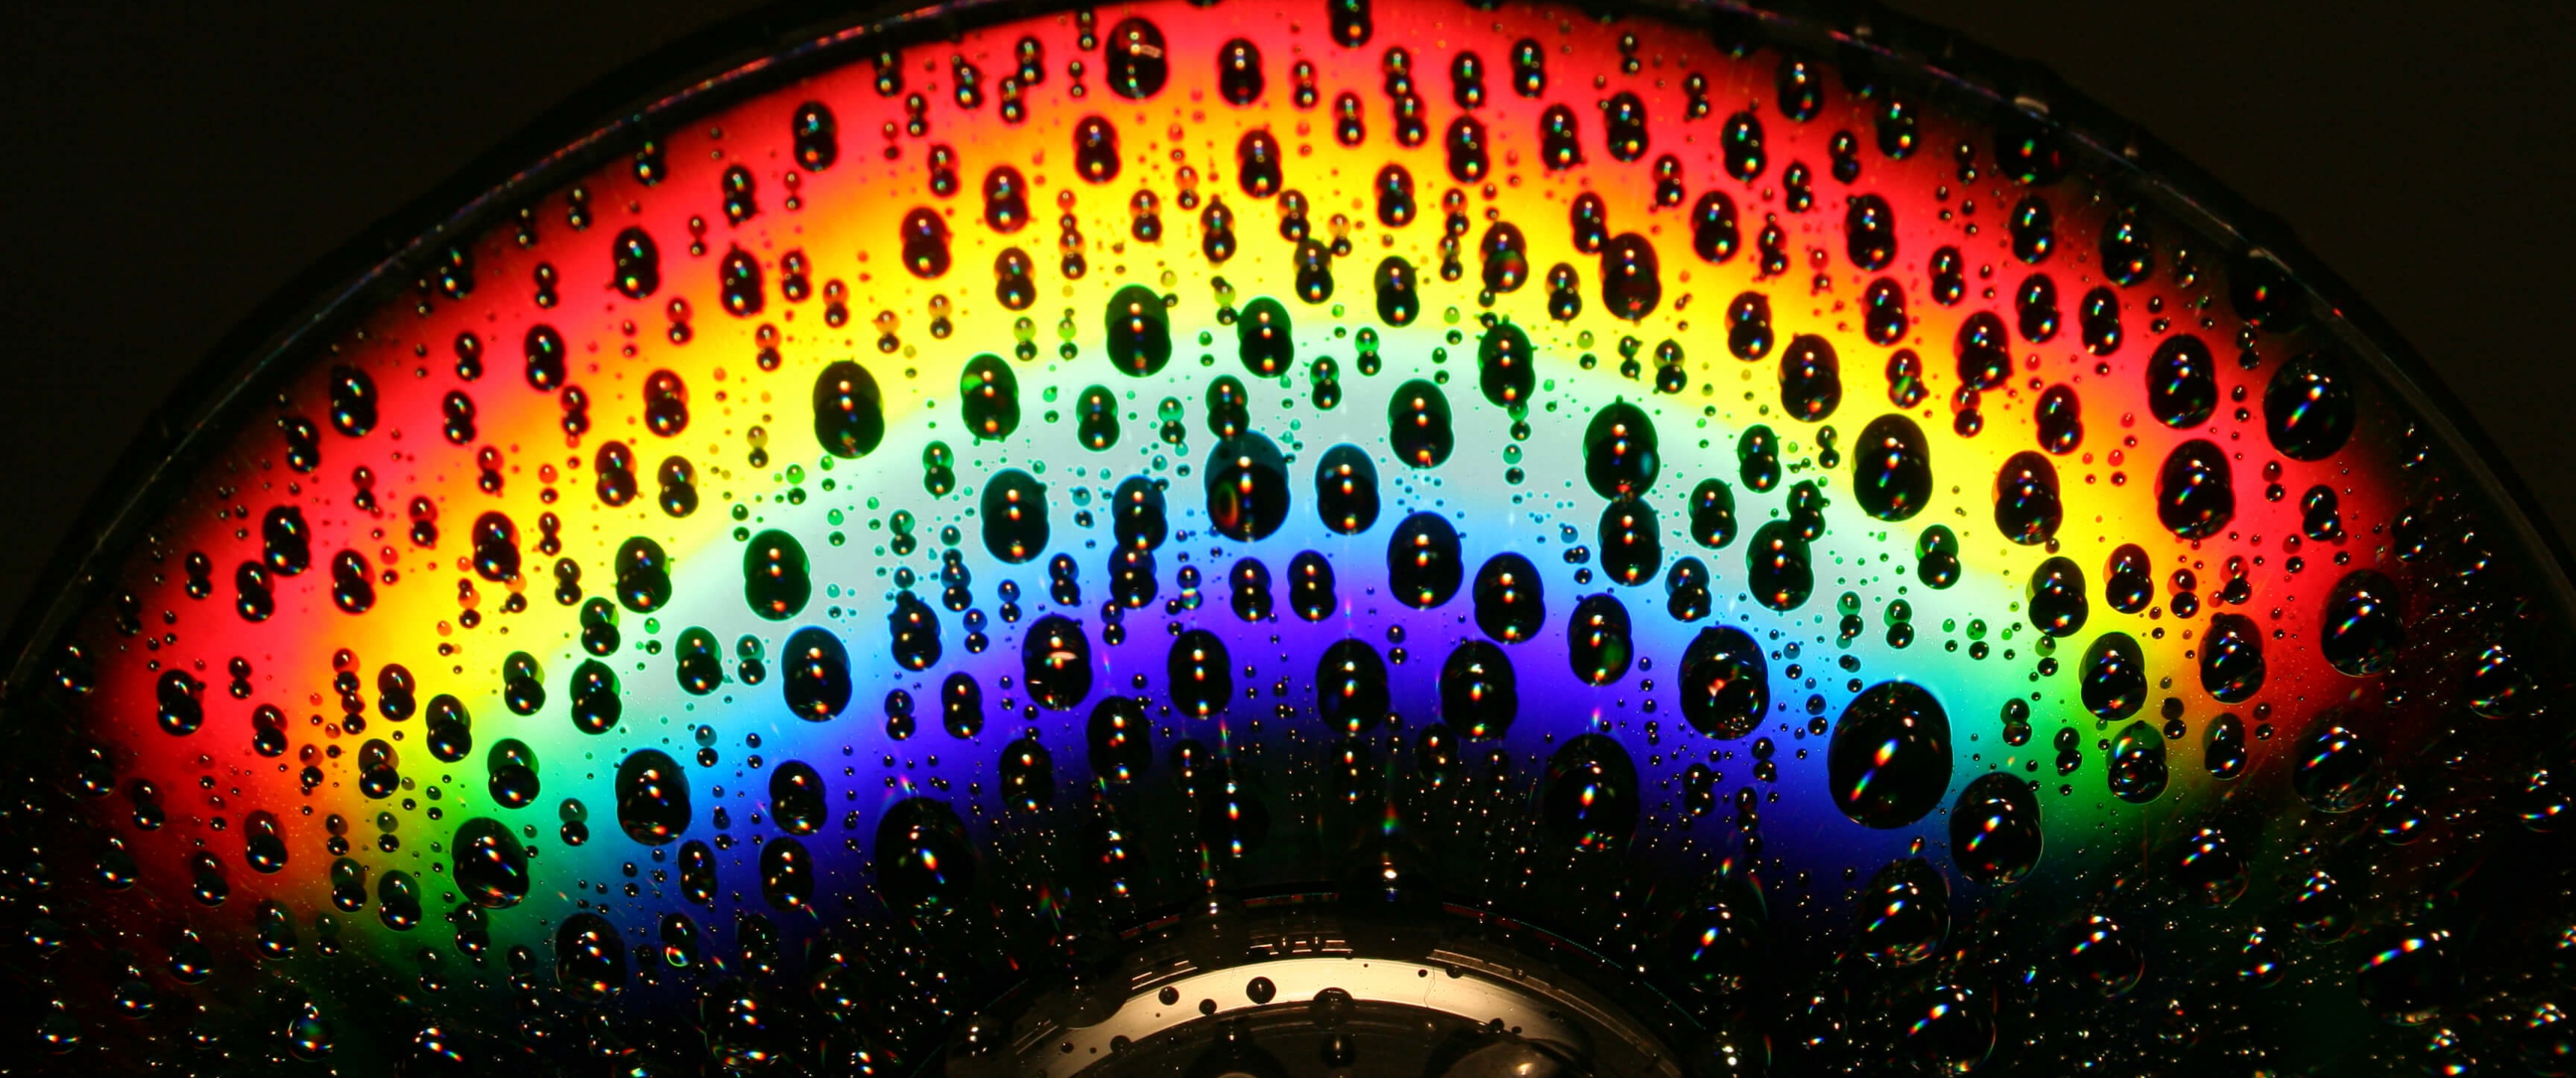 Rainbow Wallpaper 4K, CD, Droplets, Macro, Photography, #3203